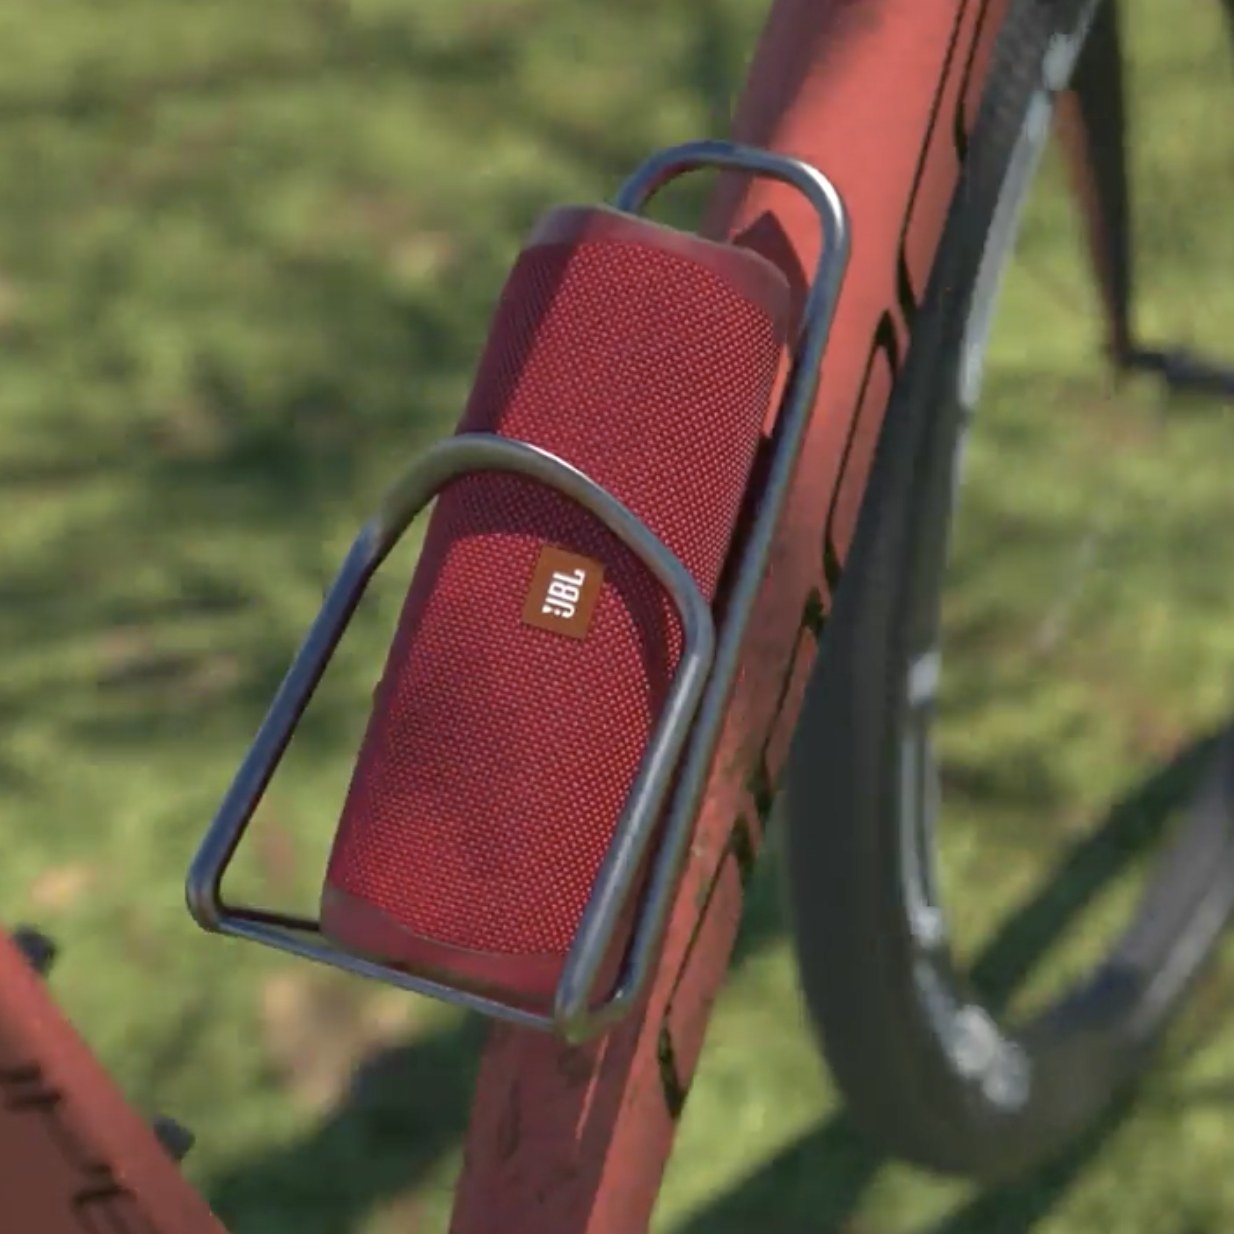 The red speaker on a bike